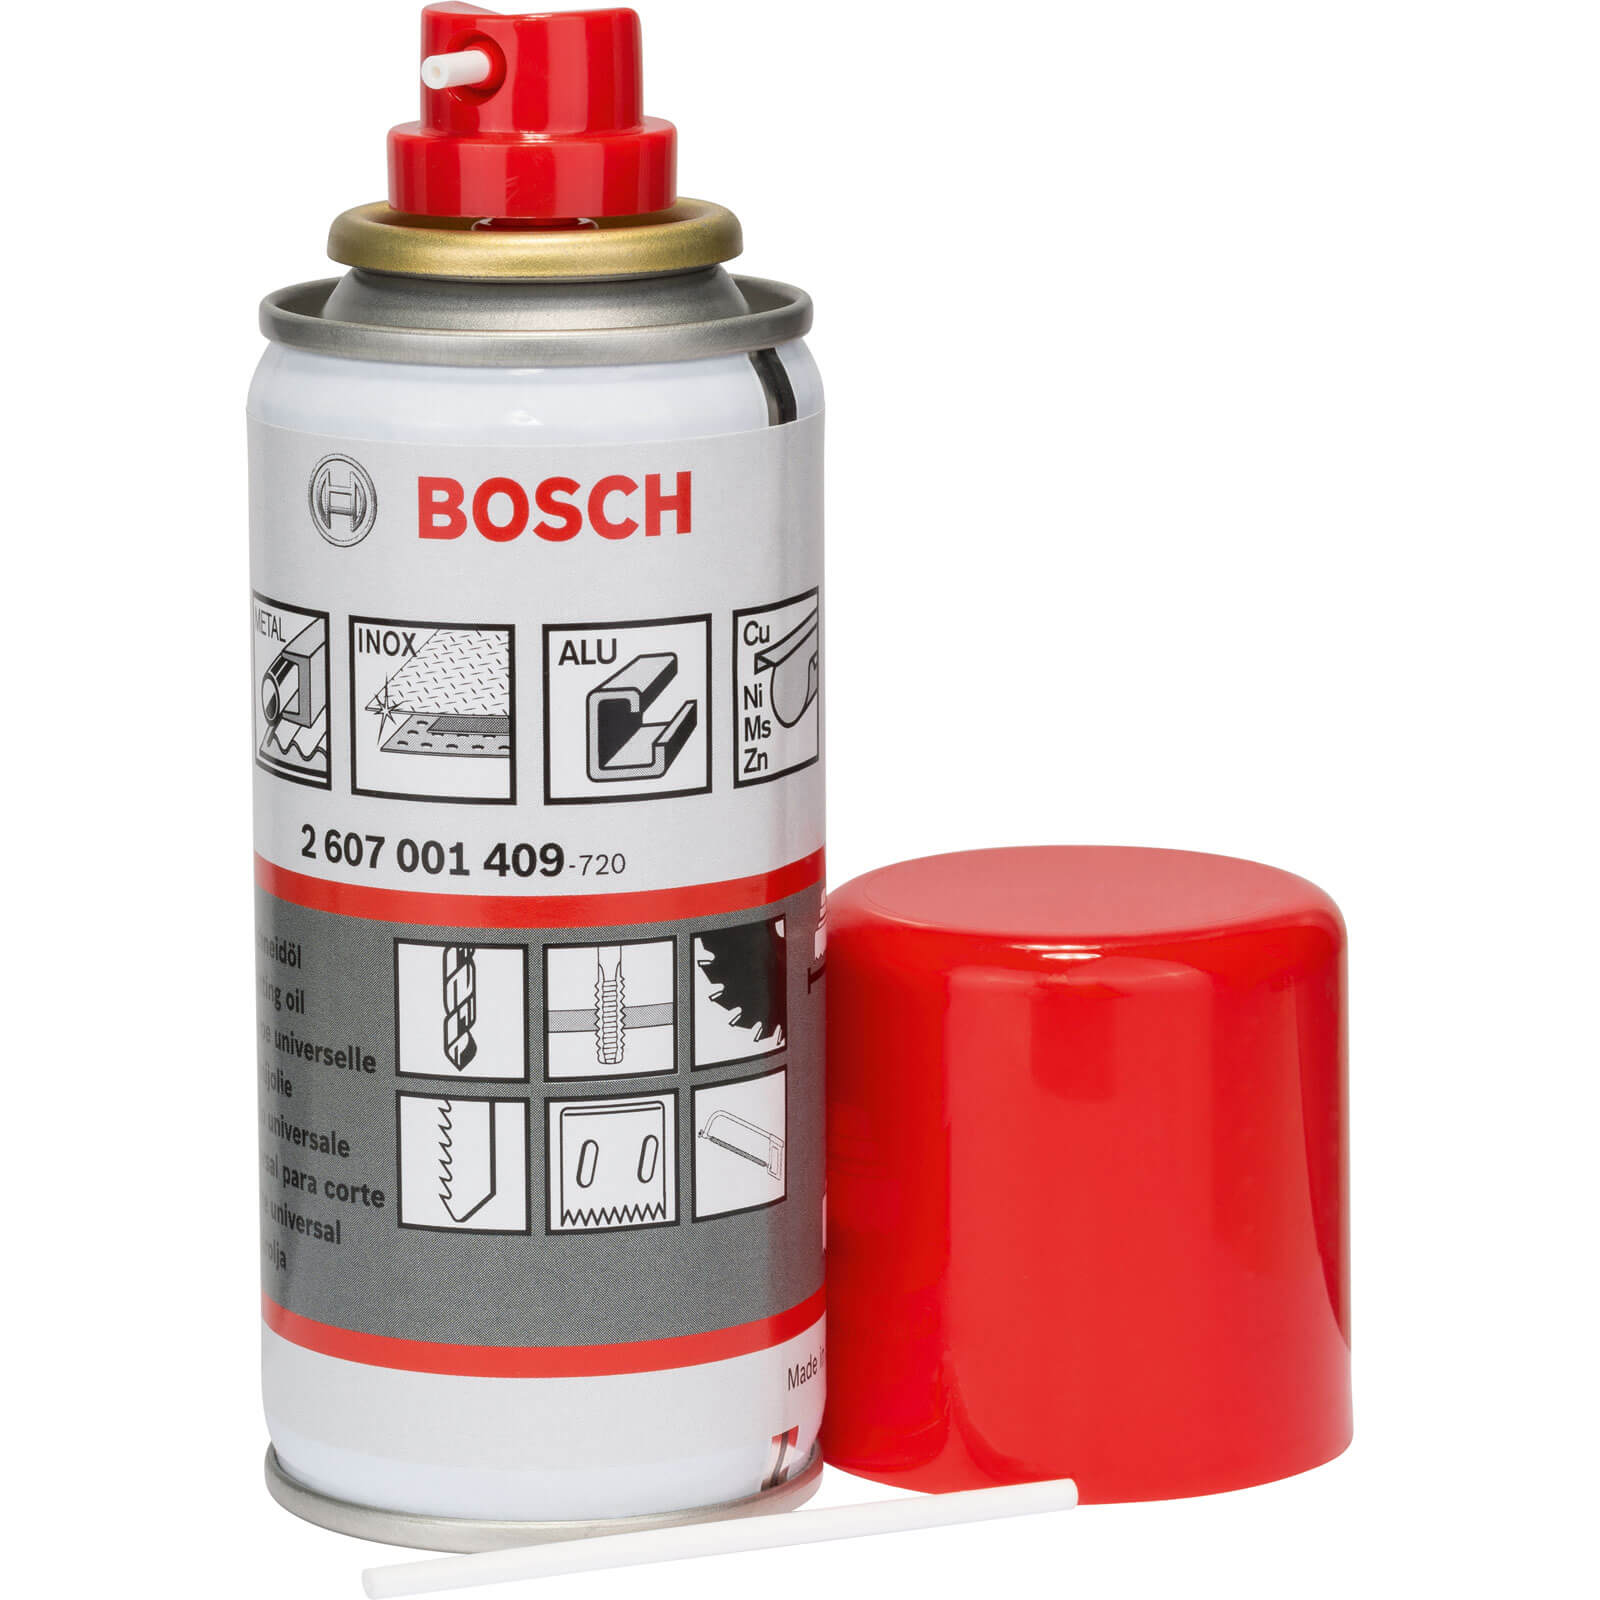 Photo of Bosch Universal Cutting Oil 100ml